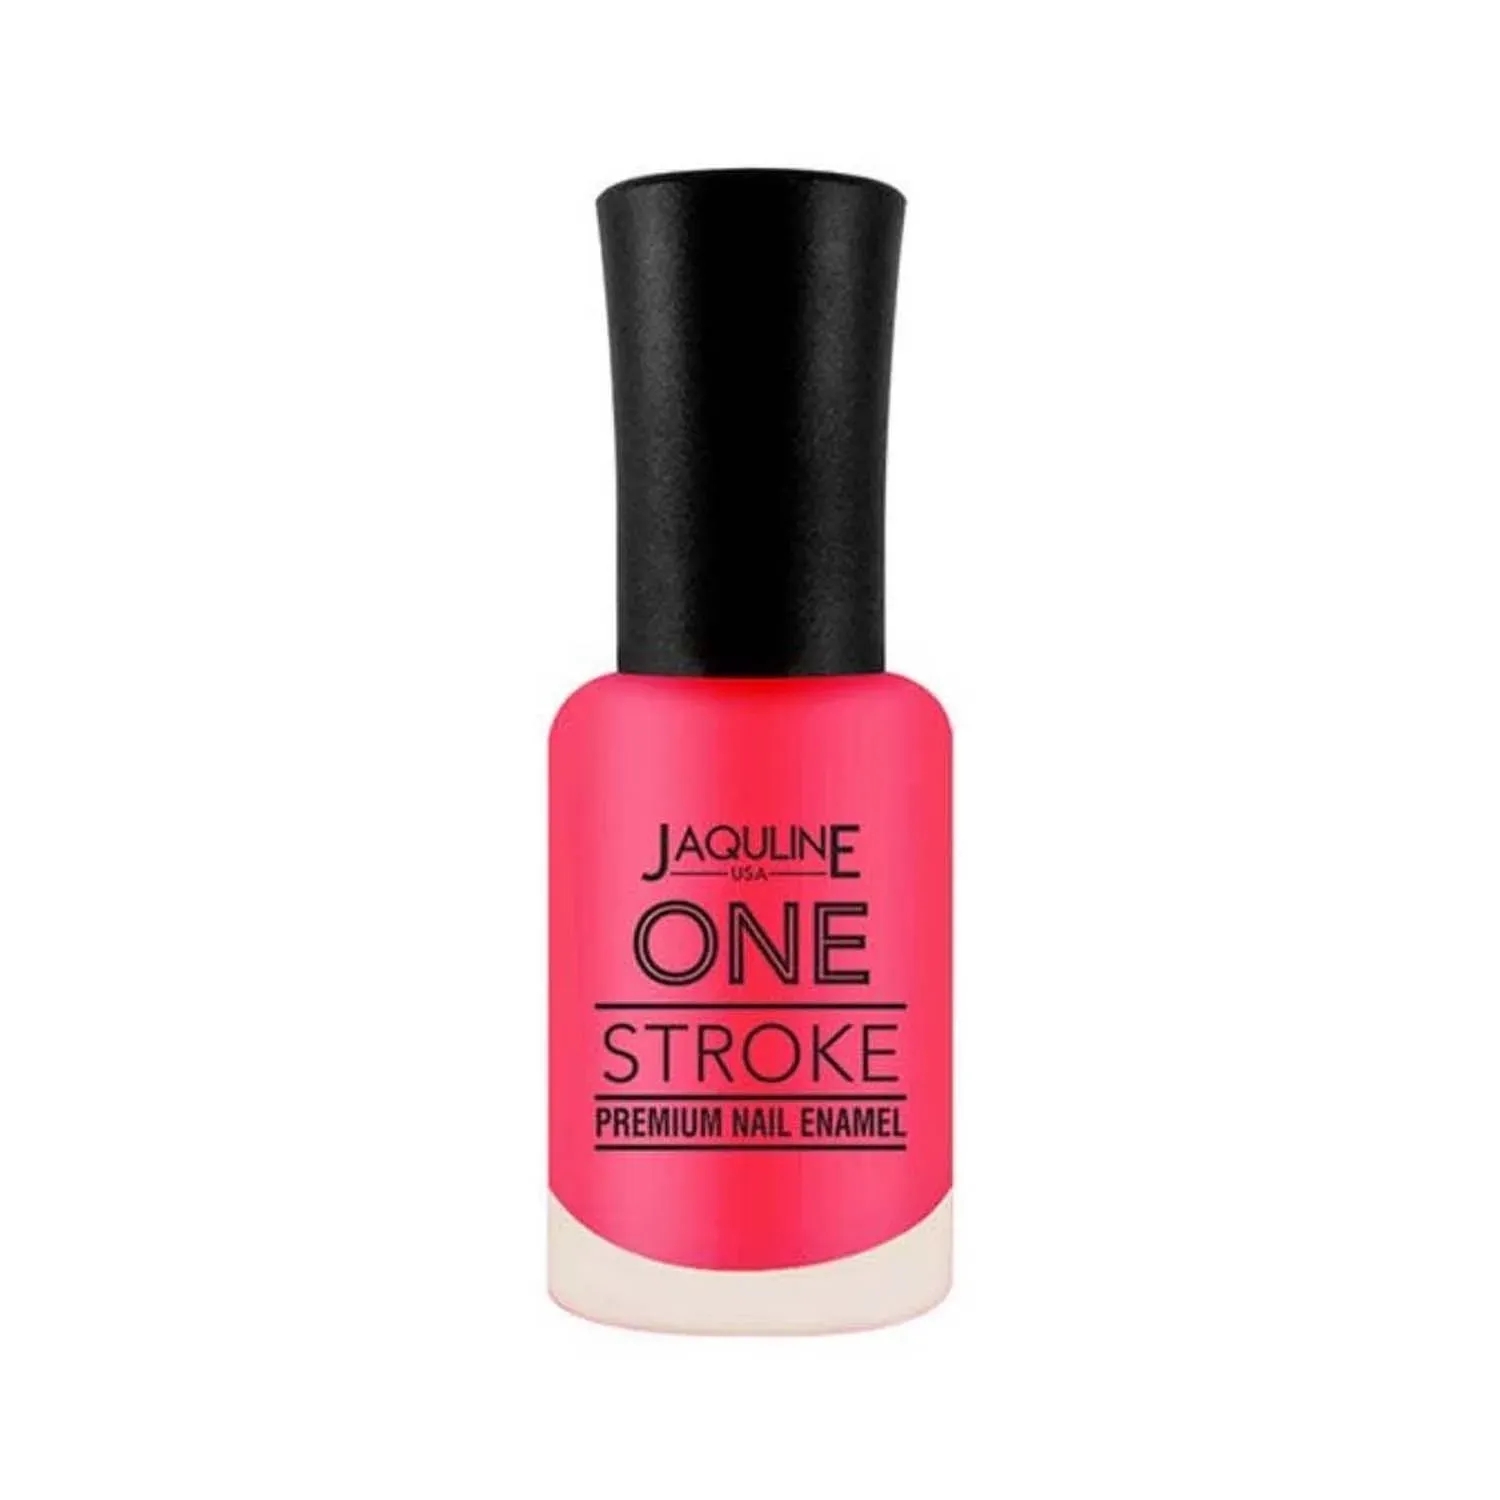 Jaquline USA | Jaquline USA One Stroke Premium Nail Enamel - J33 Pink Tease (8ml)